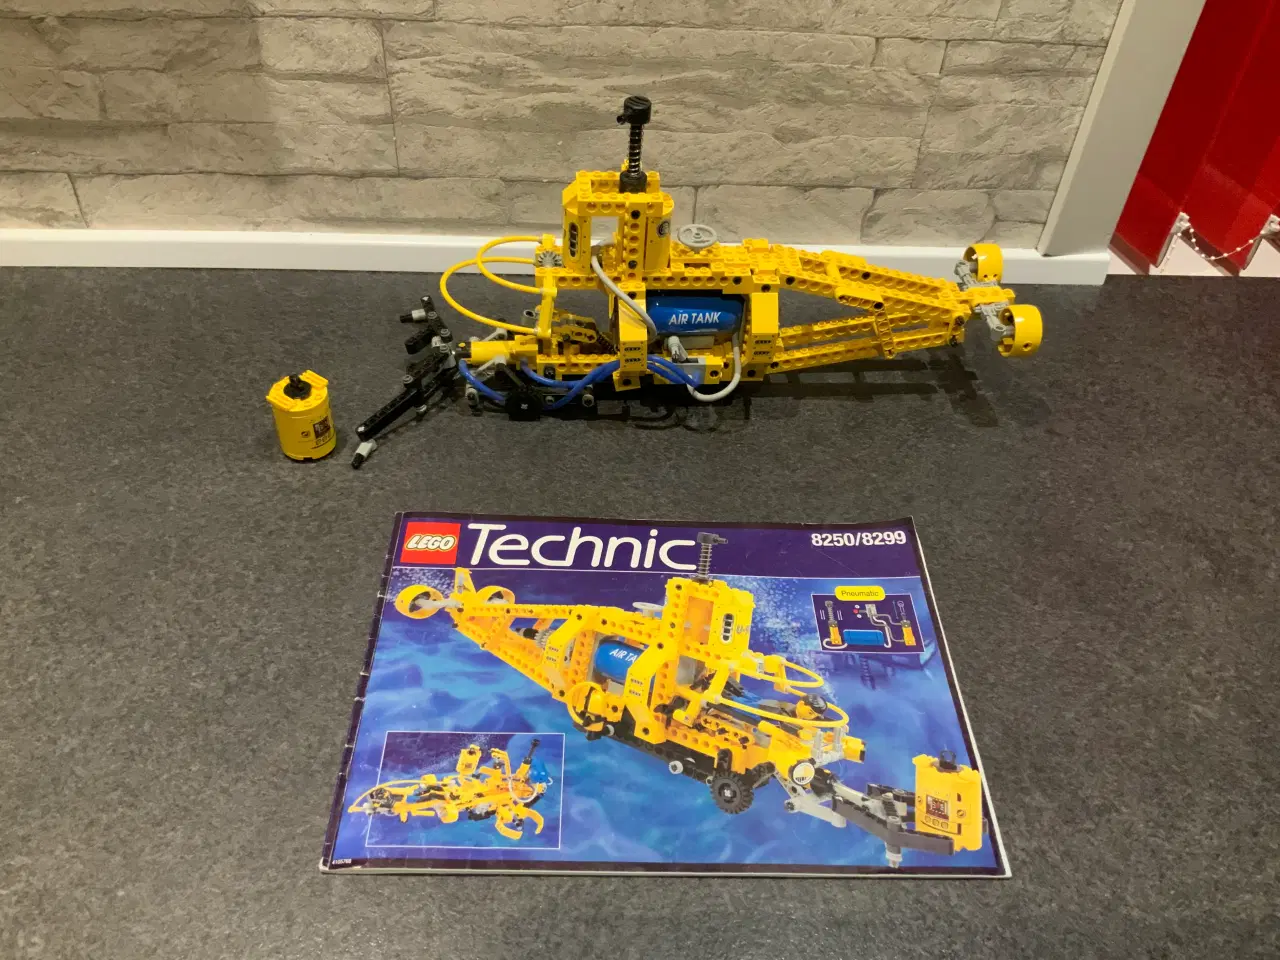 Billede 1 - Lego technic 8250/8299 ubåd